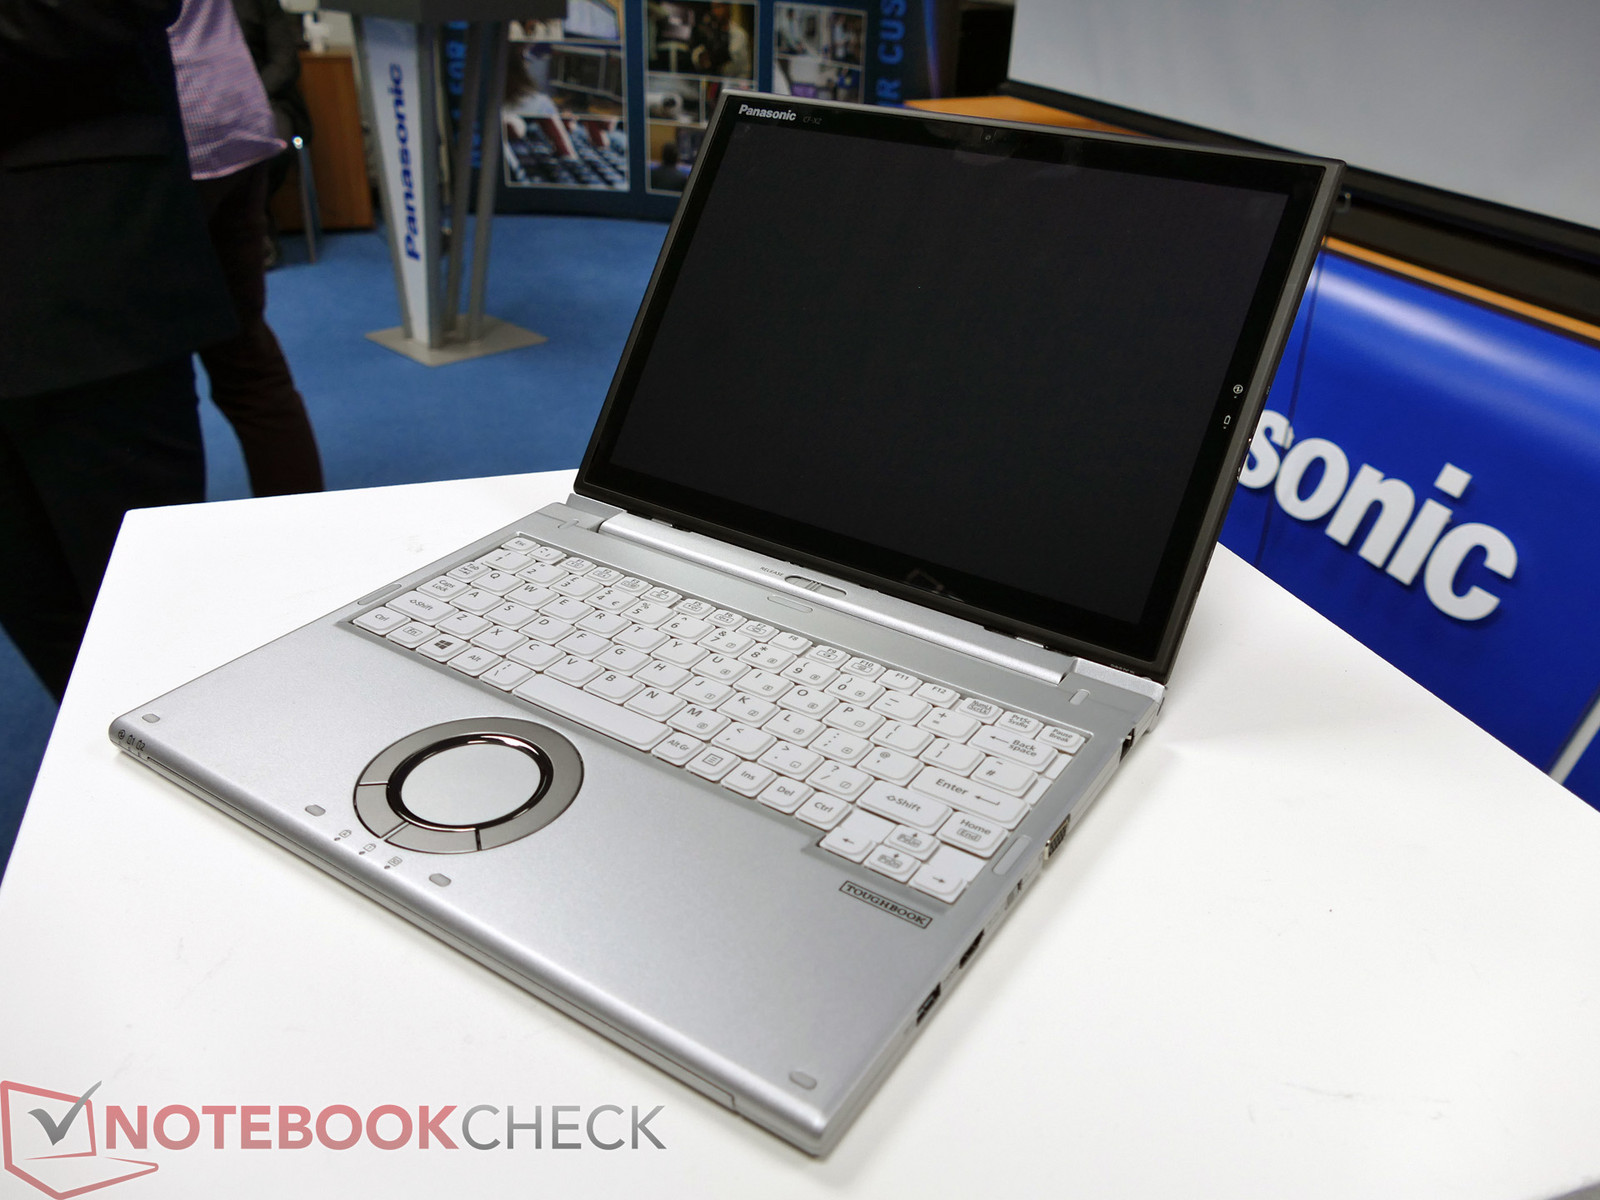 Panasonic: Toughbook CF-XZ6 announced - NotebookCheck.net News